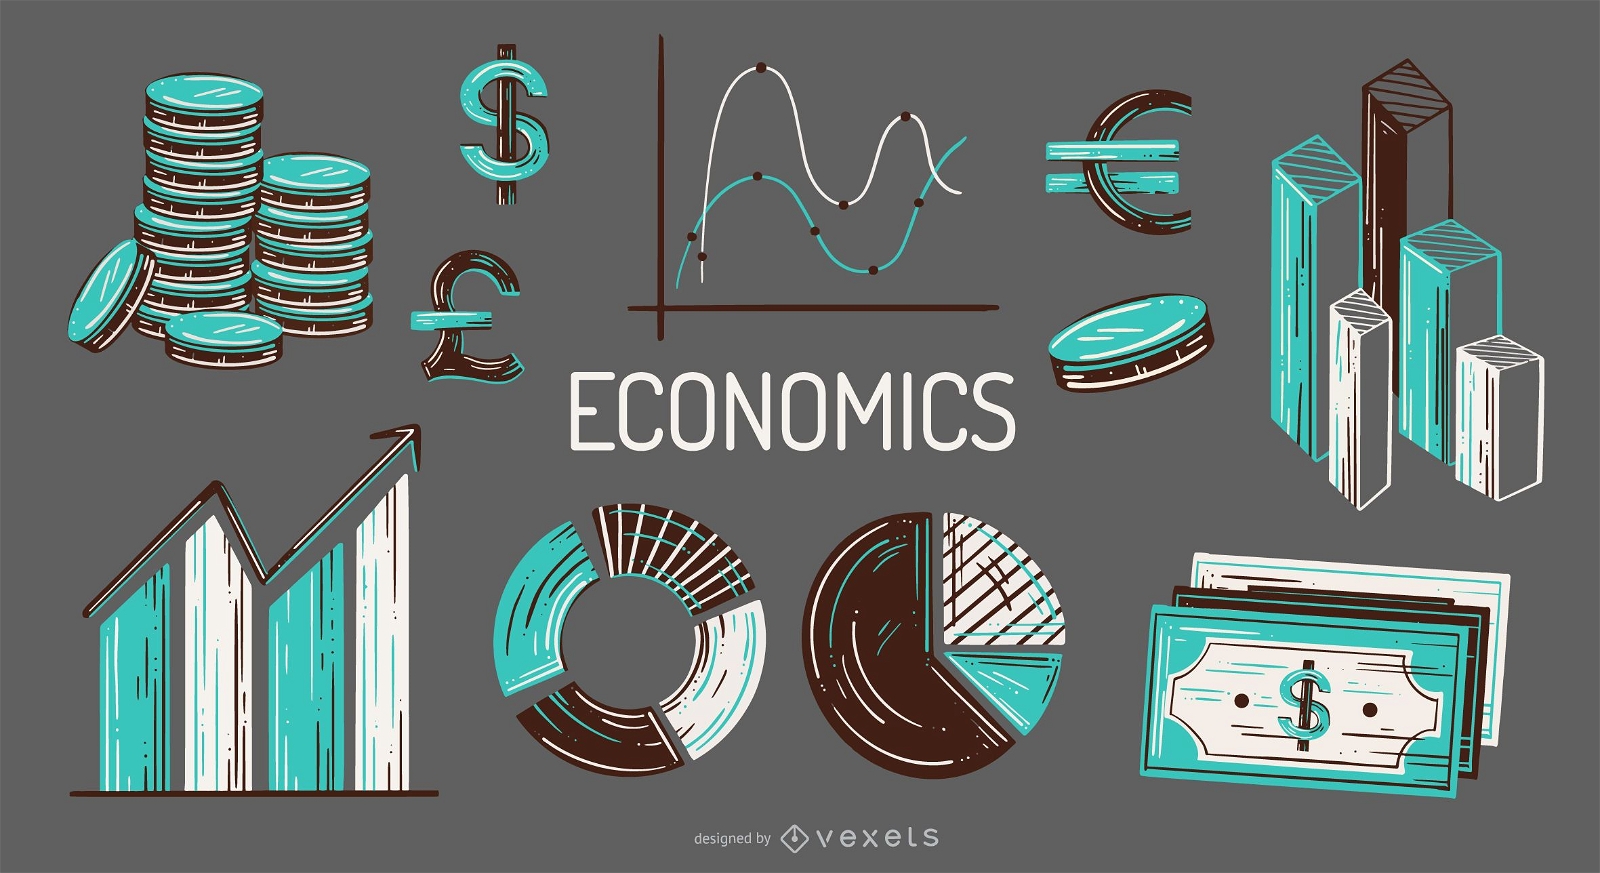 visual representation of economics